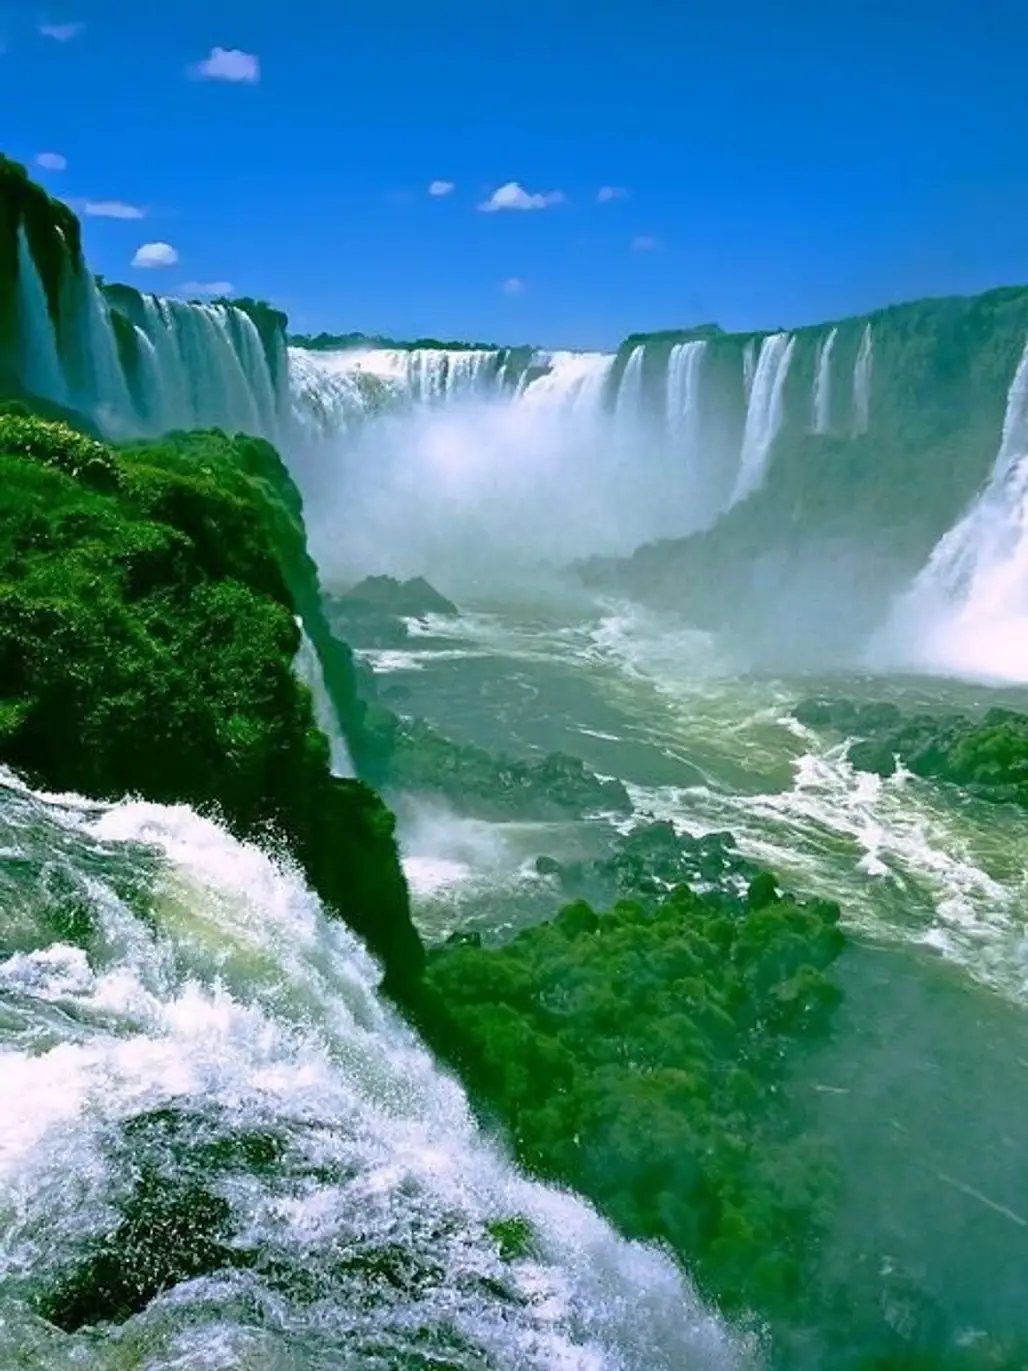 The Iguazu Waterfalls, Argentina/Brazil